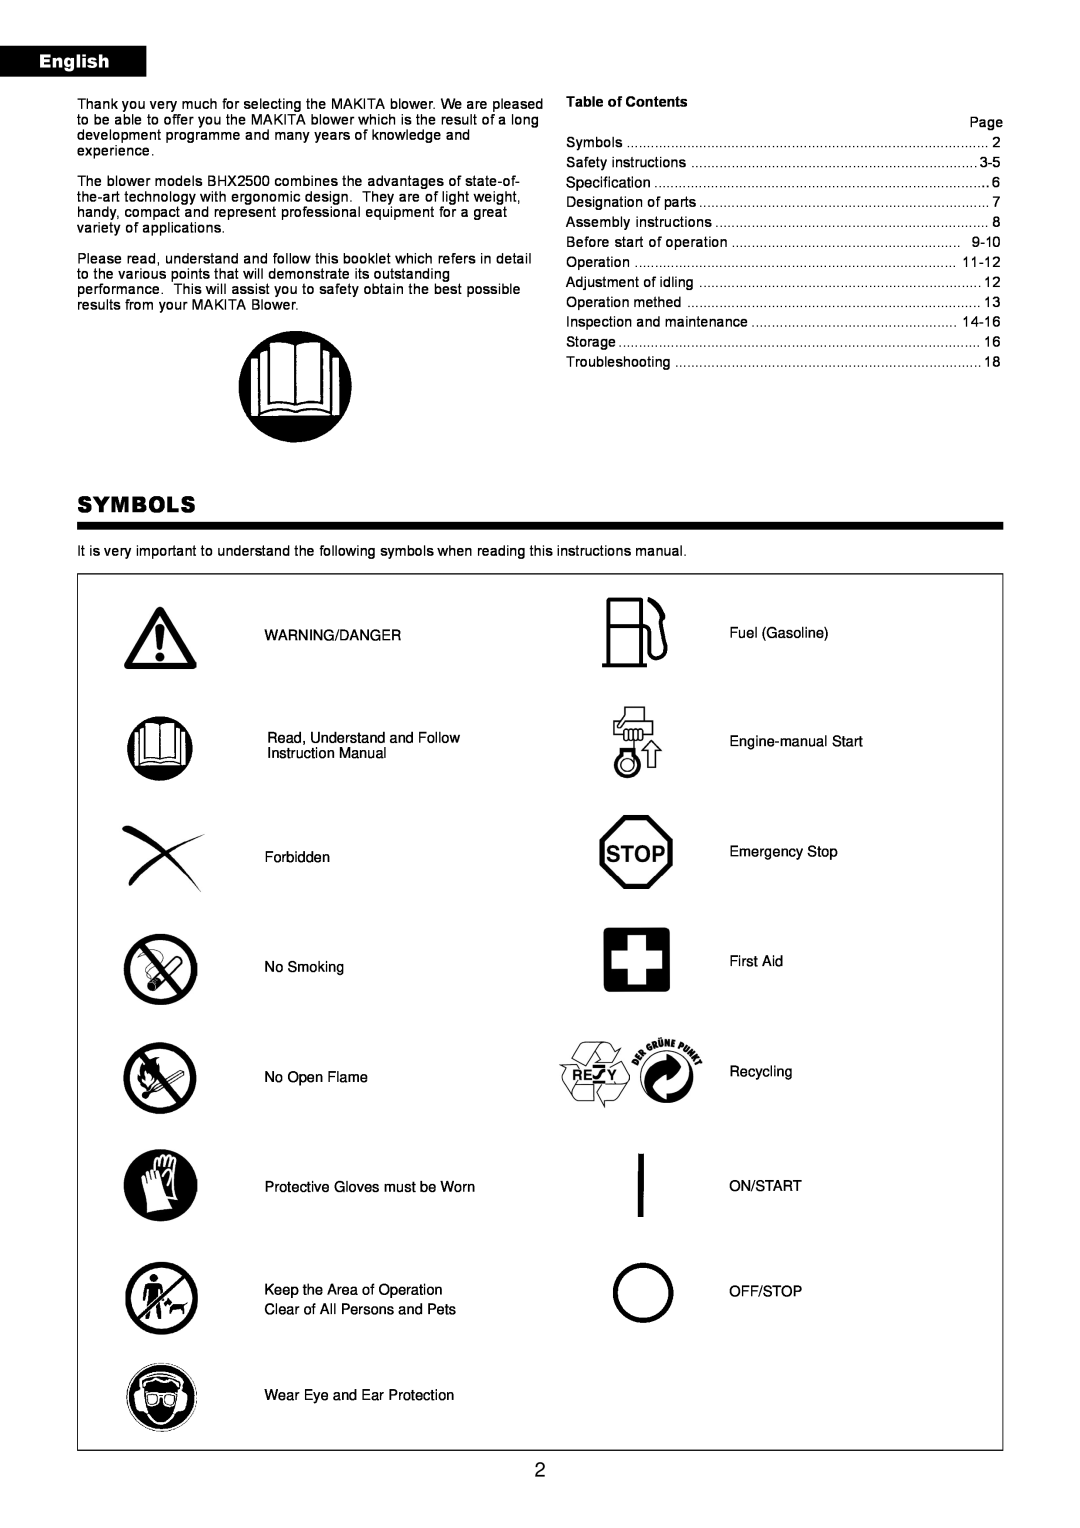 Makita BHX2500 instruction manual Symbols, English, Table of Contents 